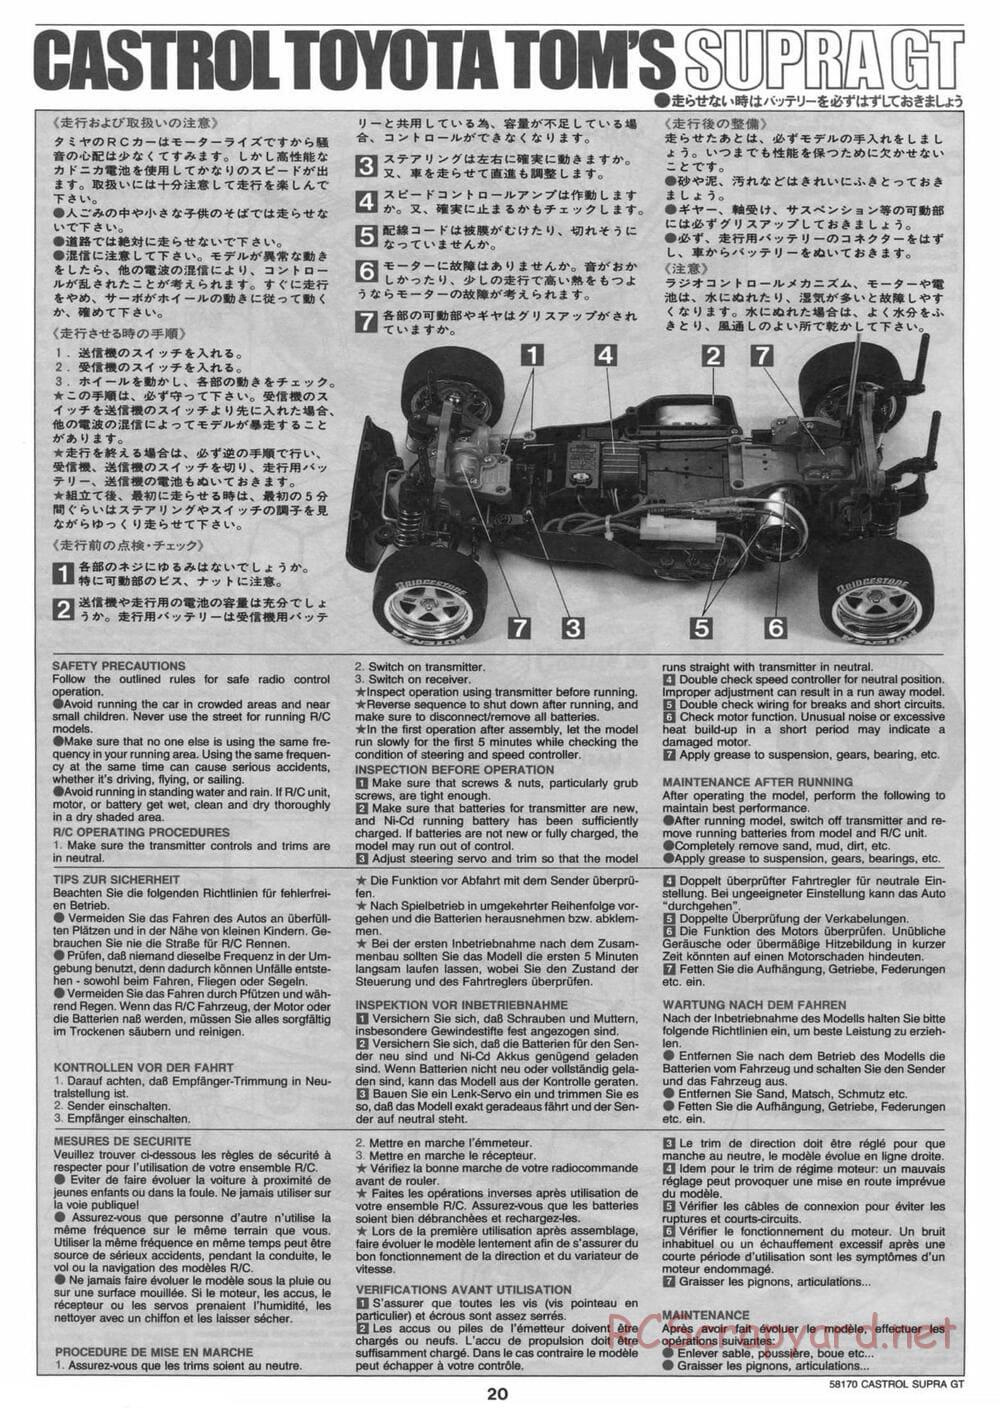 Tamiya - Castrol Toyota Tom's Supra GT - TA-02W Chassis - Manual - Page 20